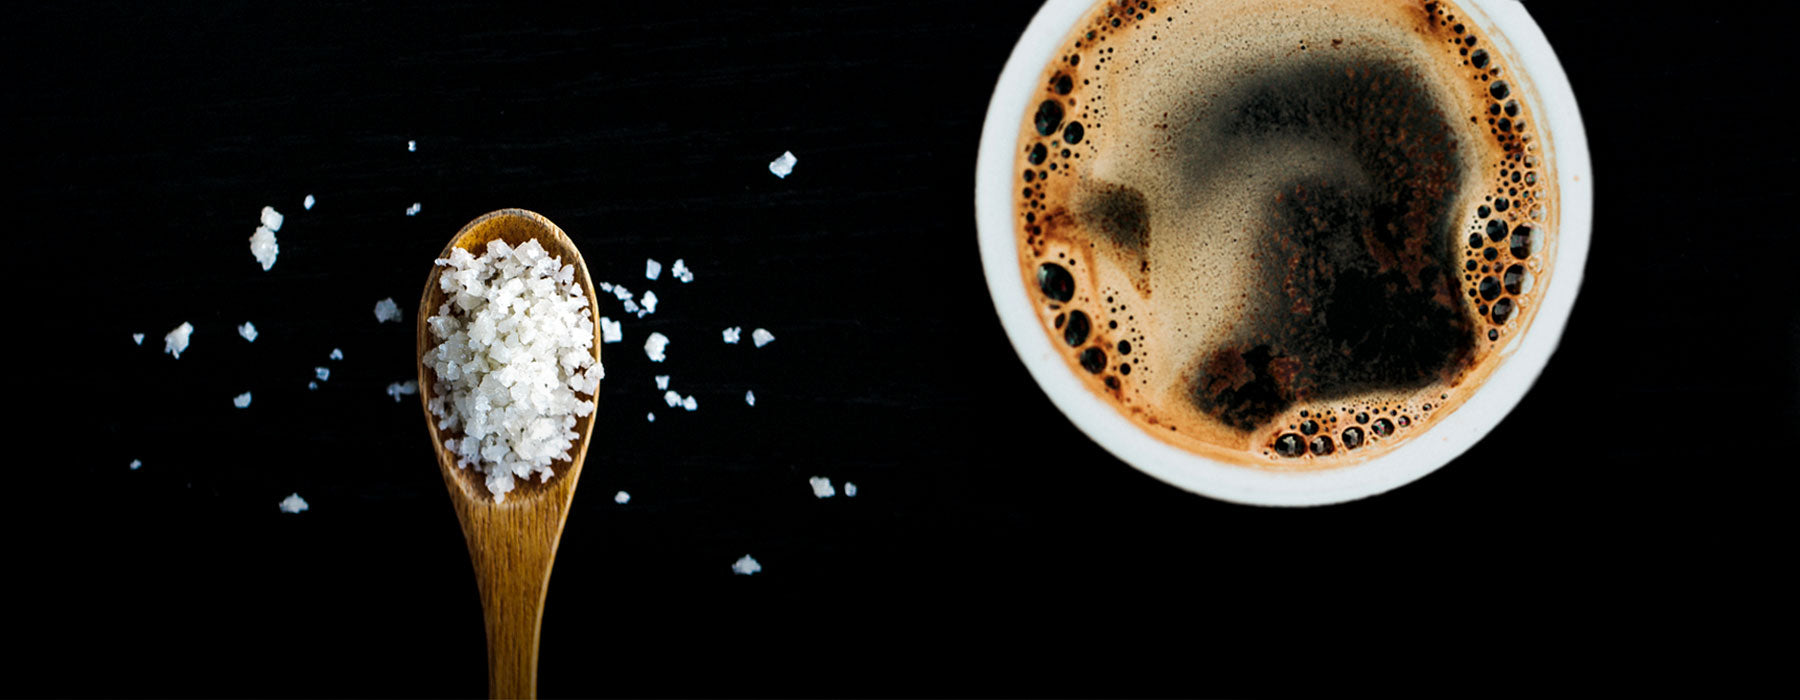 Salt In Coffee - Does It Really Taste Better? - Coffee Life, by EspressoWorks